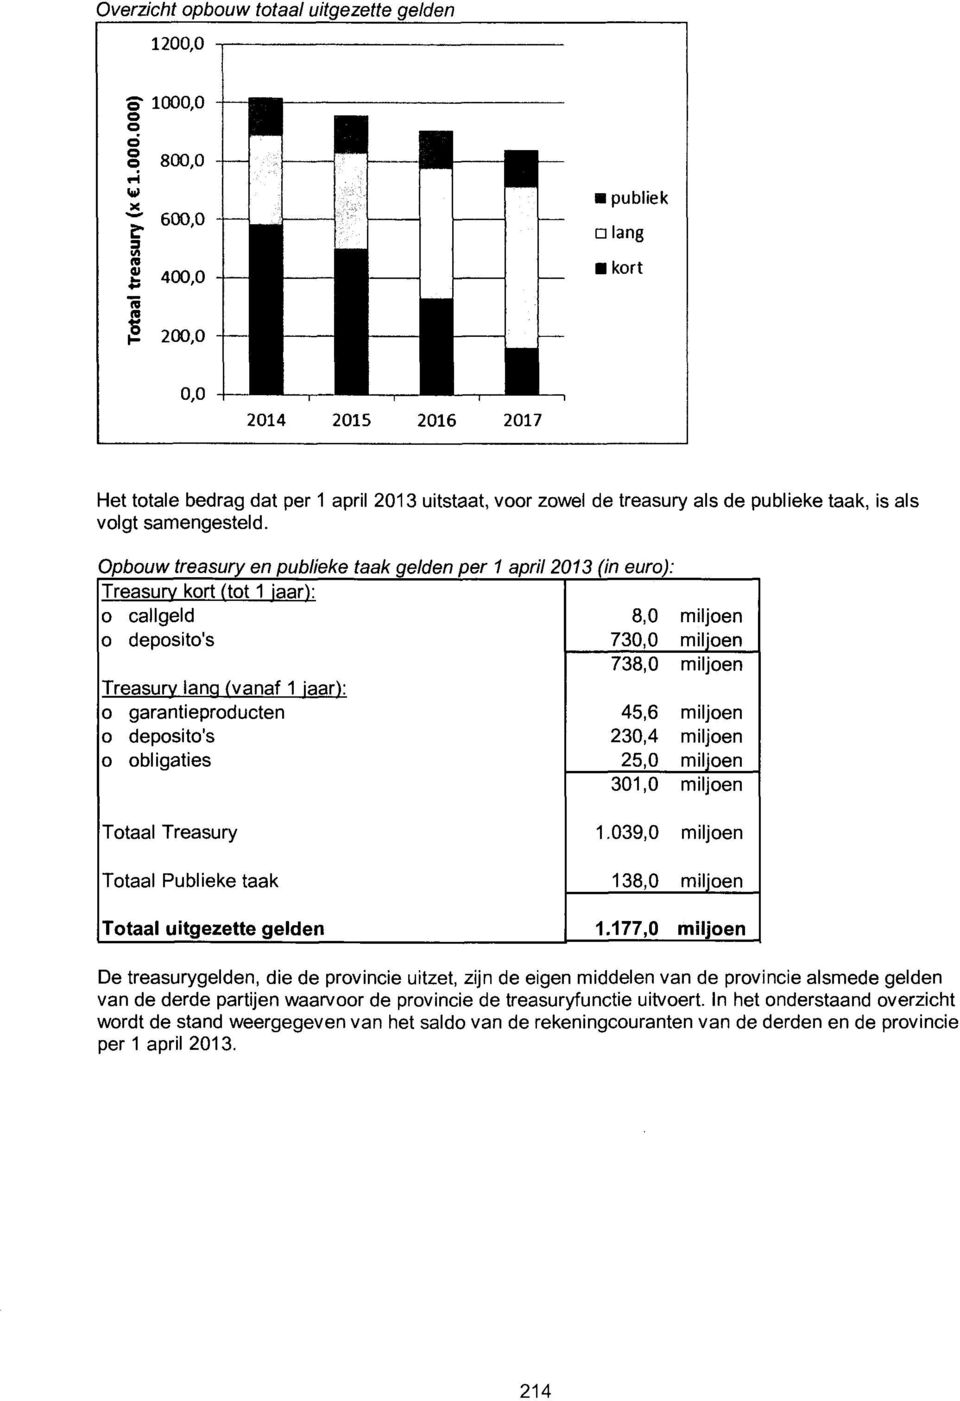 Opbouw treasury en publieke taak gelden per 1 april 2013 (in euro) Treasurv kort ftot 1 jaar): 0 callgeld 8,0 0 deposito's 730,0 738,0 Treasurv lana (vanaf 1 jaar): 0 garantieproducten 45,6 o